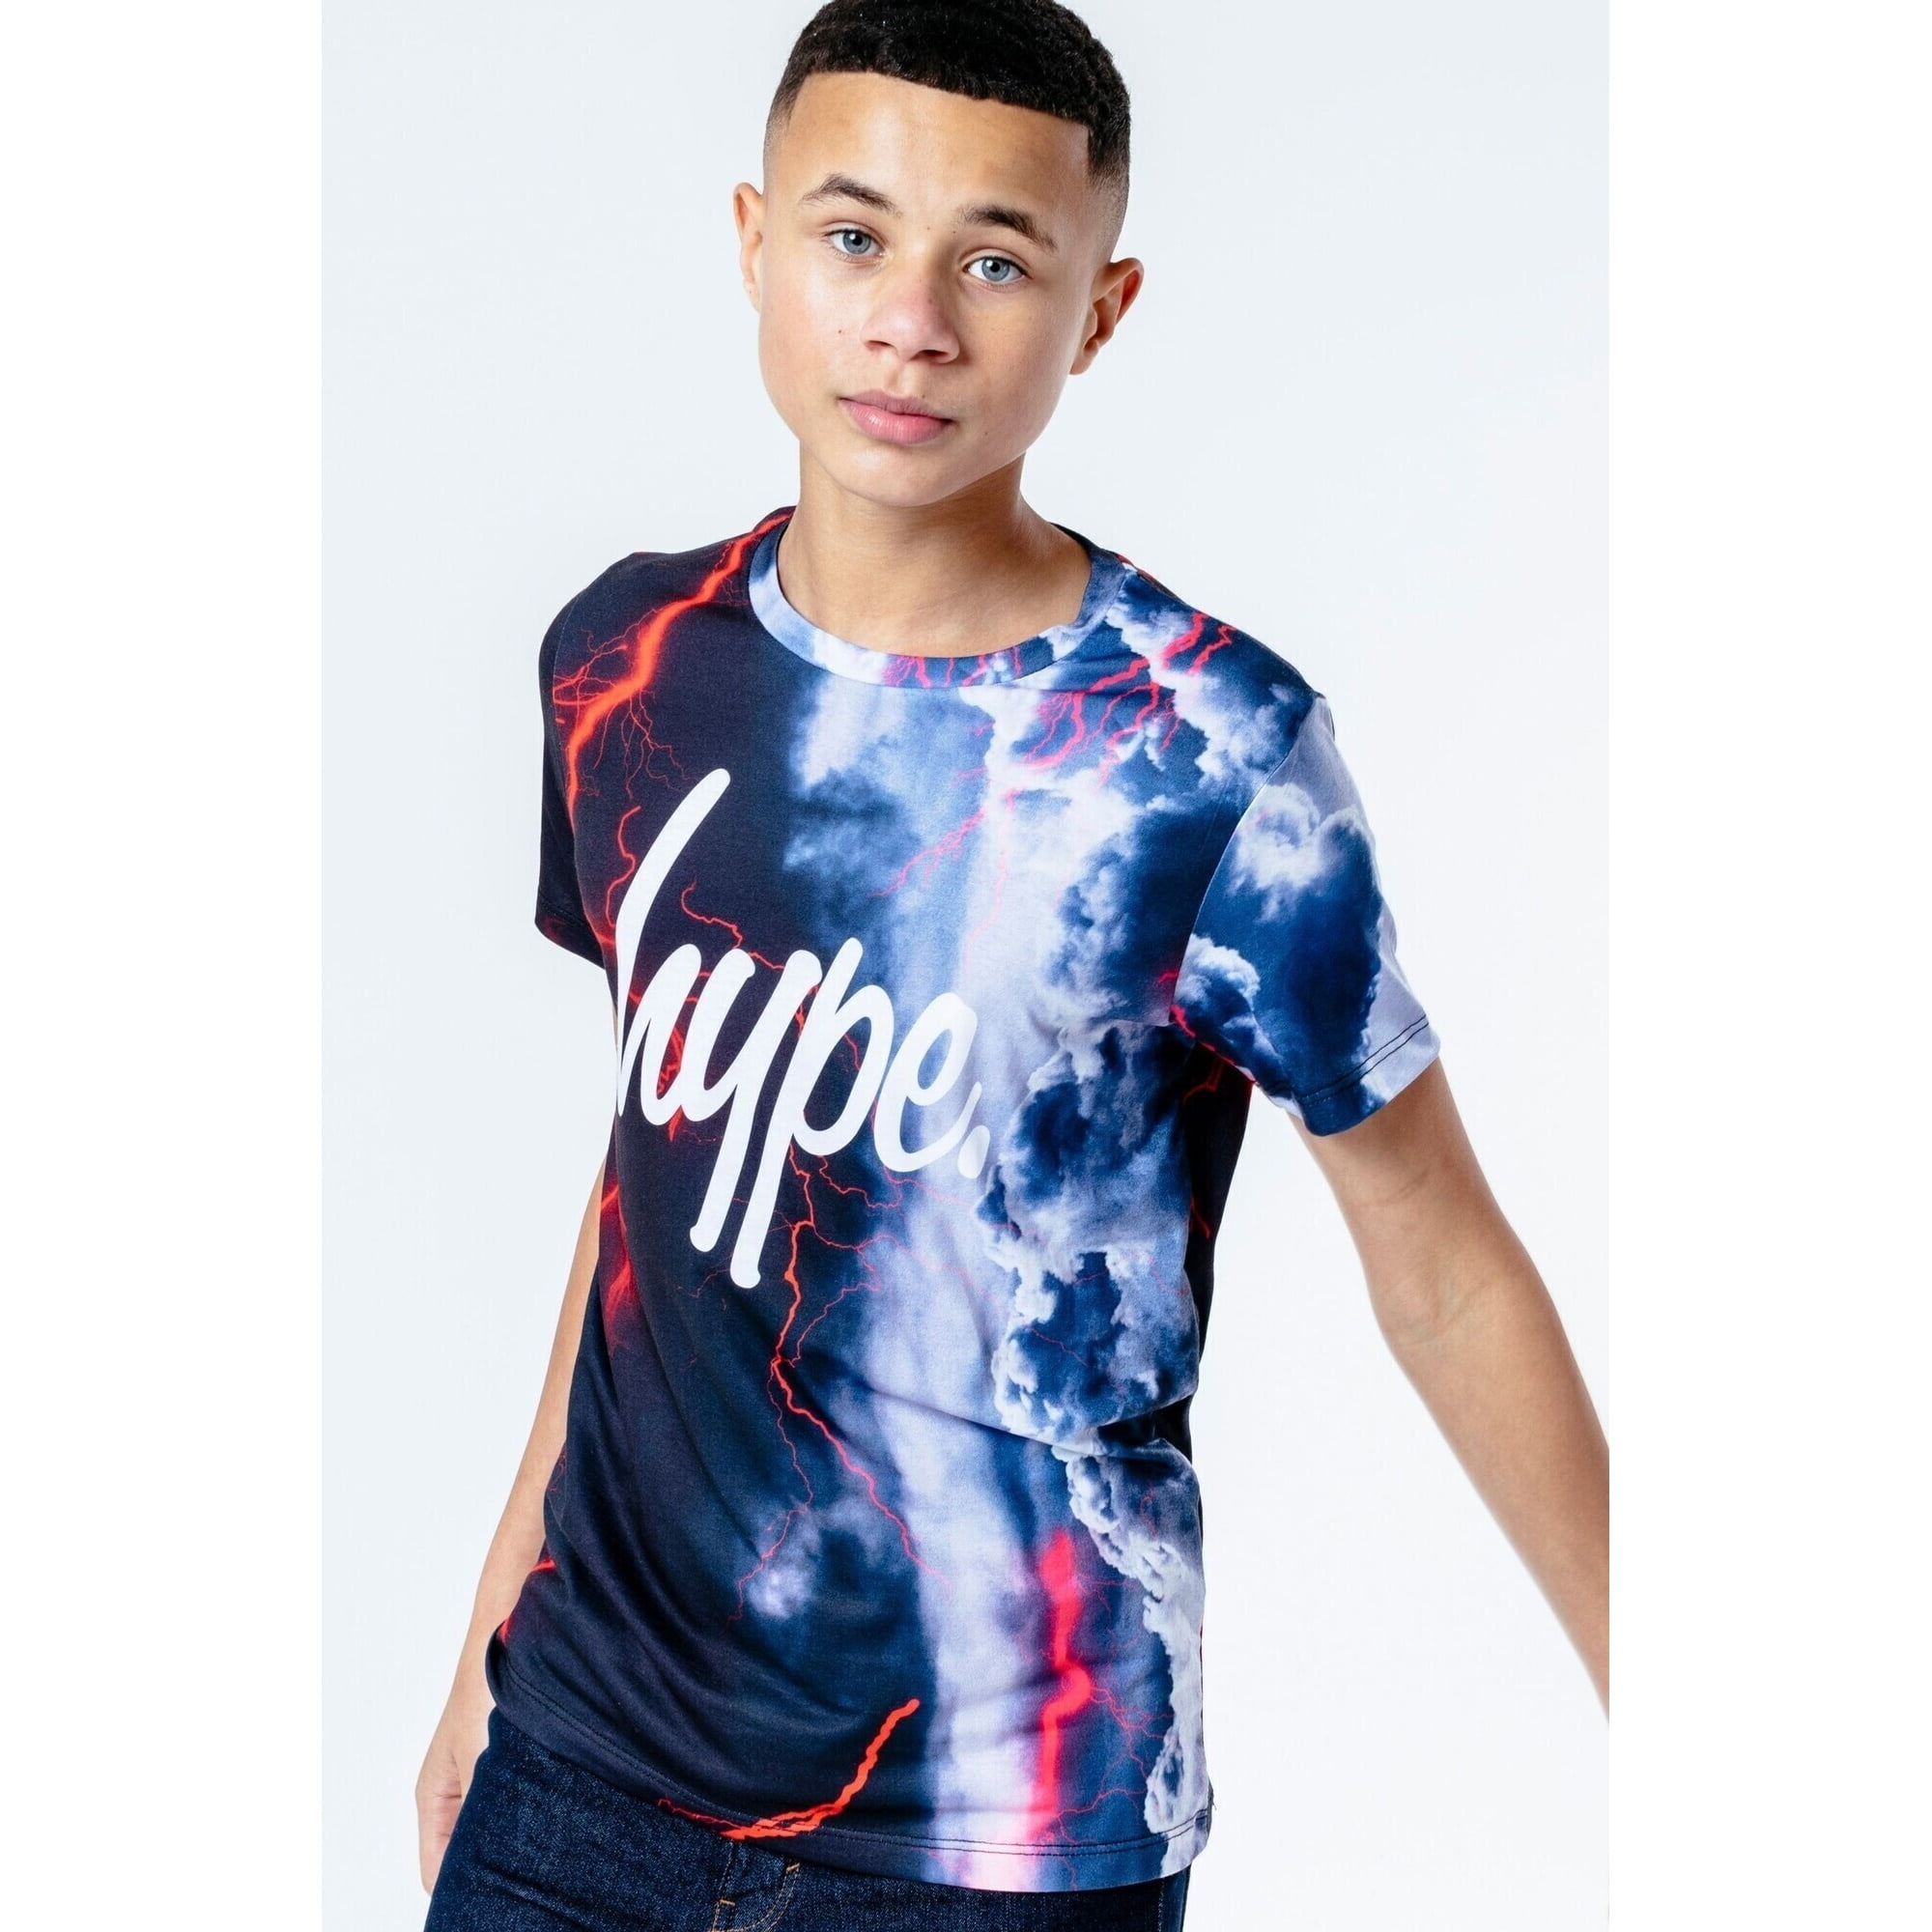 Hype Boys Hype Multicoloured Galaxy T-Shirt Age 9-10 Years Hype T-Shirt 